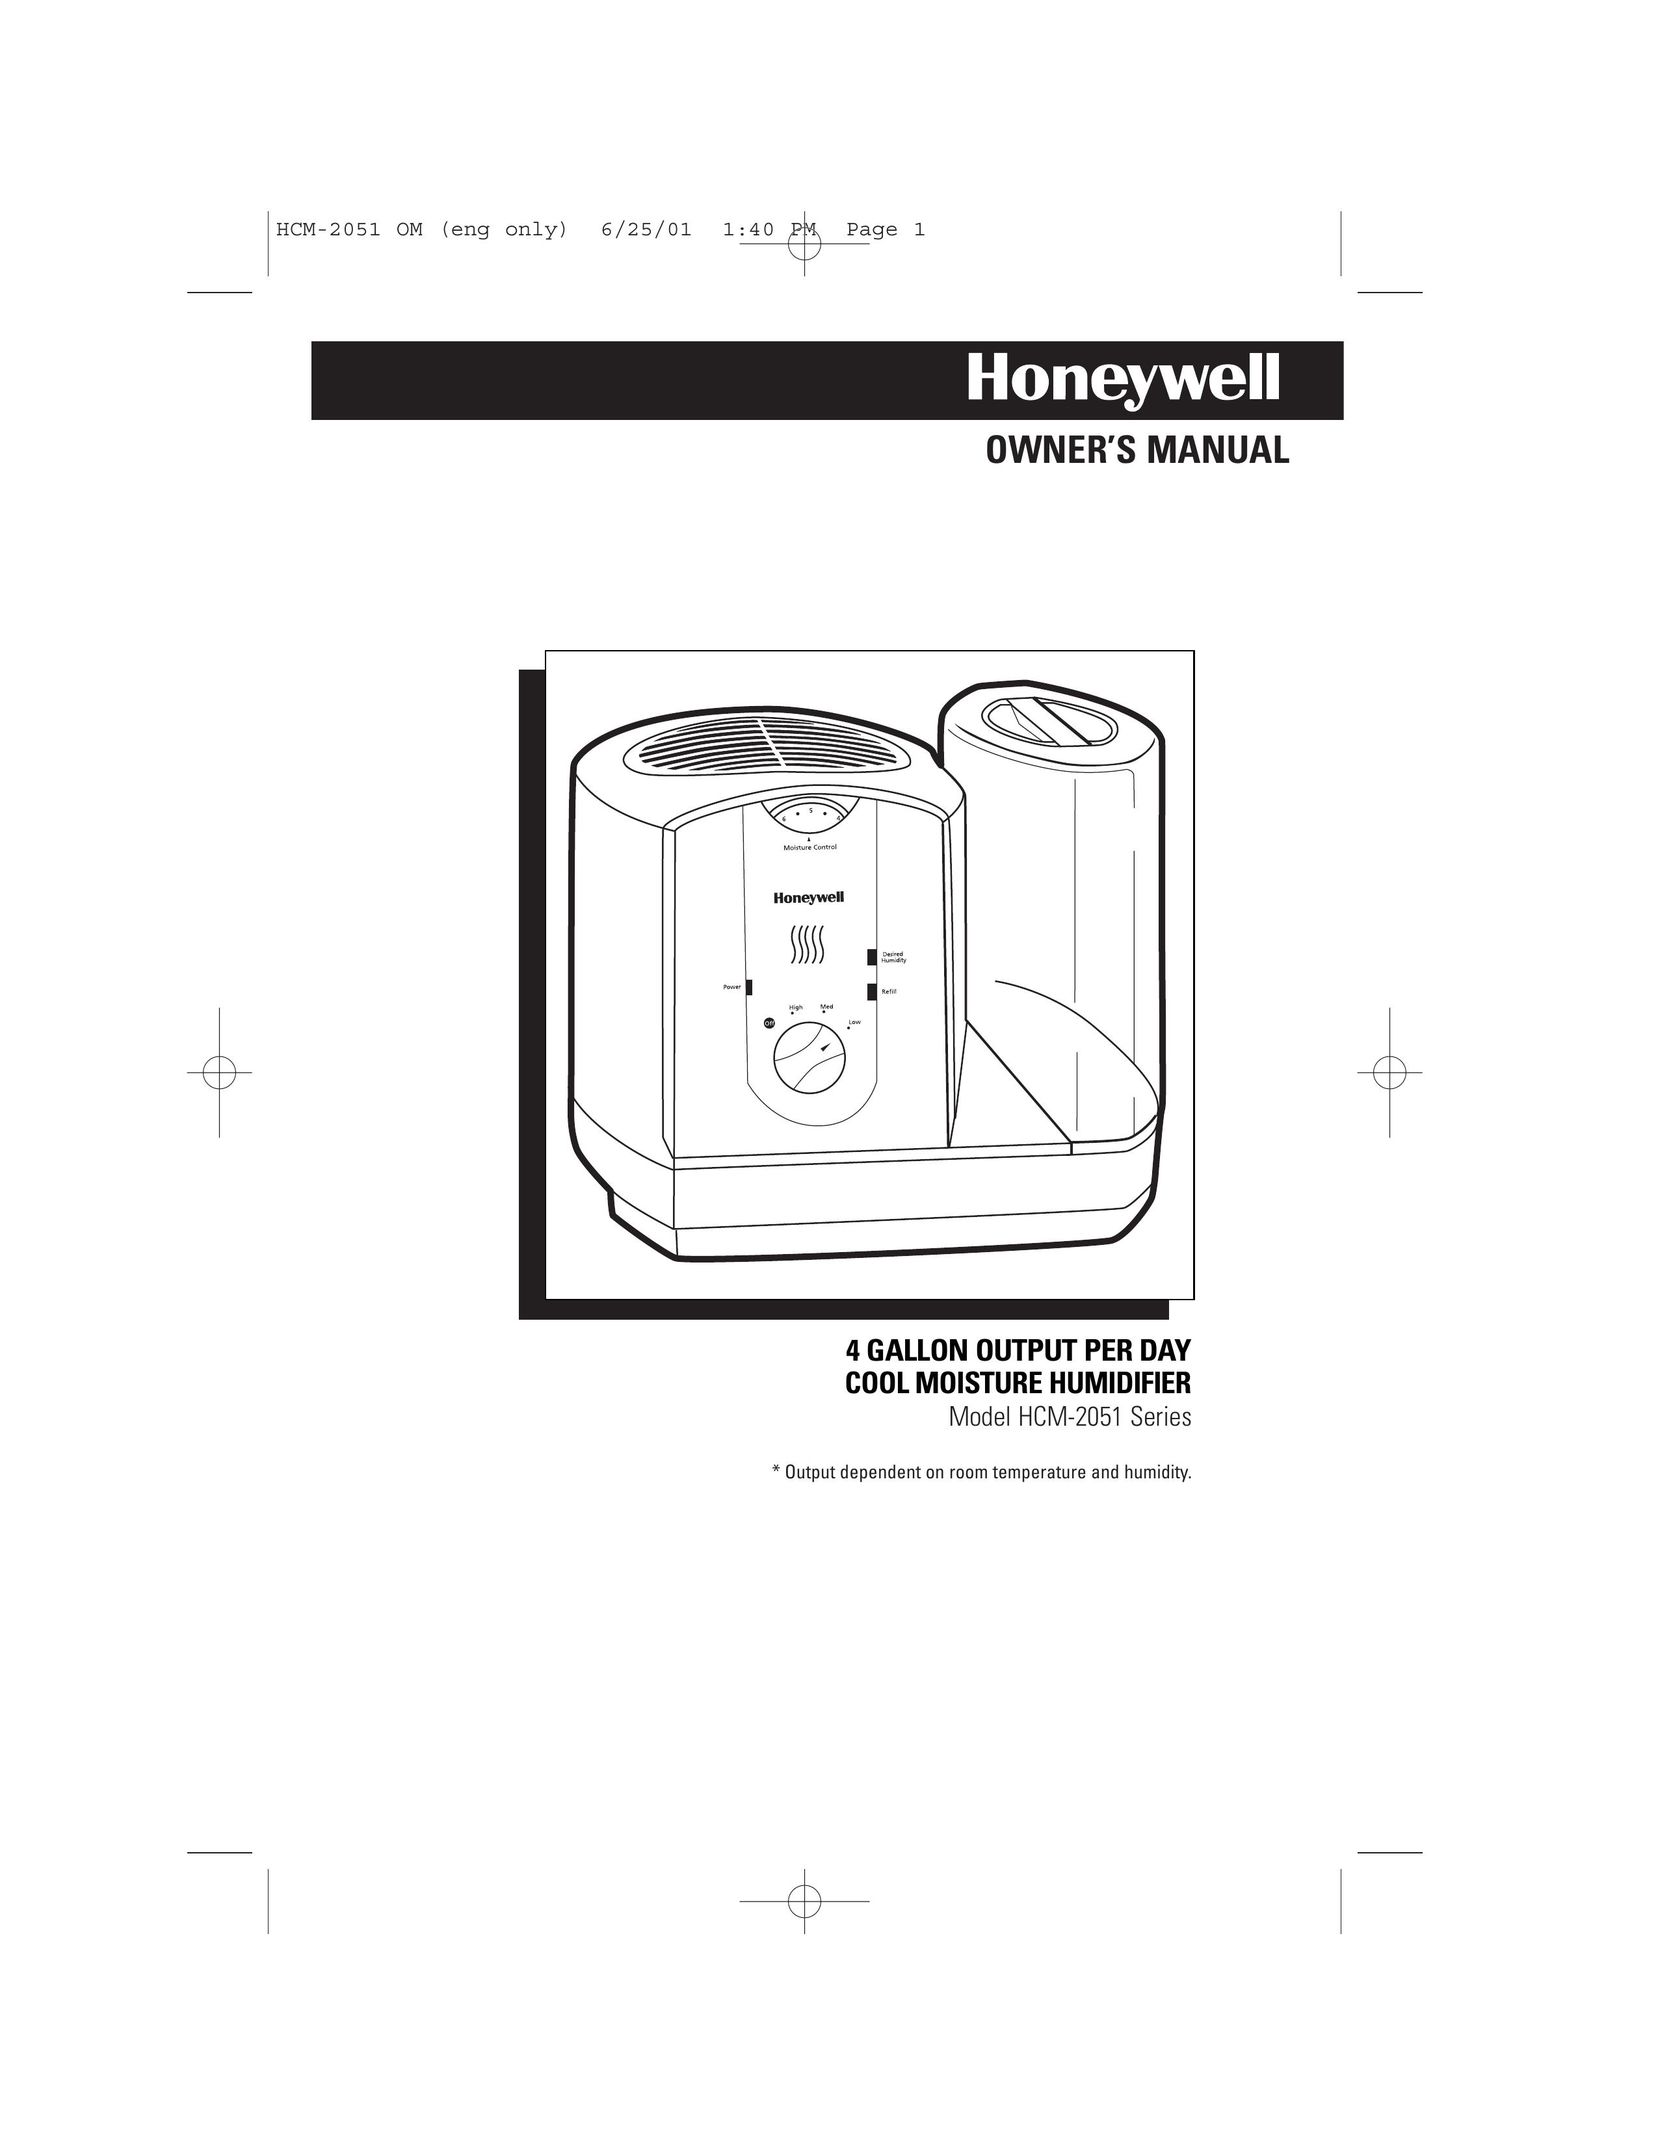 Honeywell HCM-2051 Humidifier User Manual